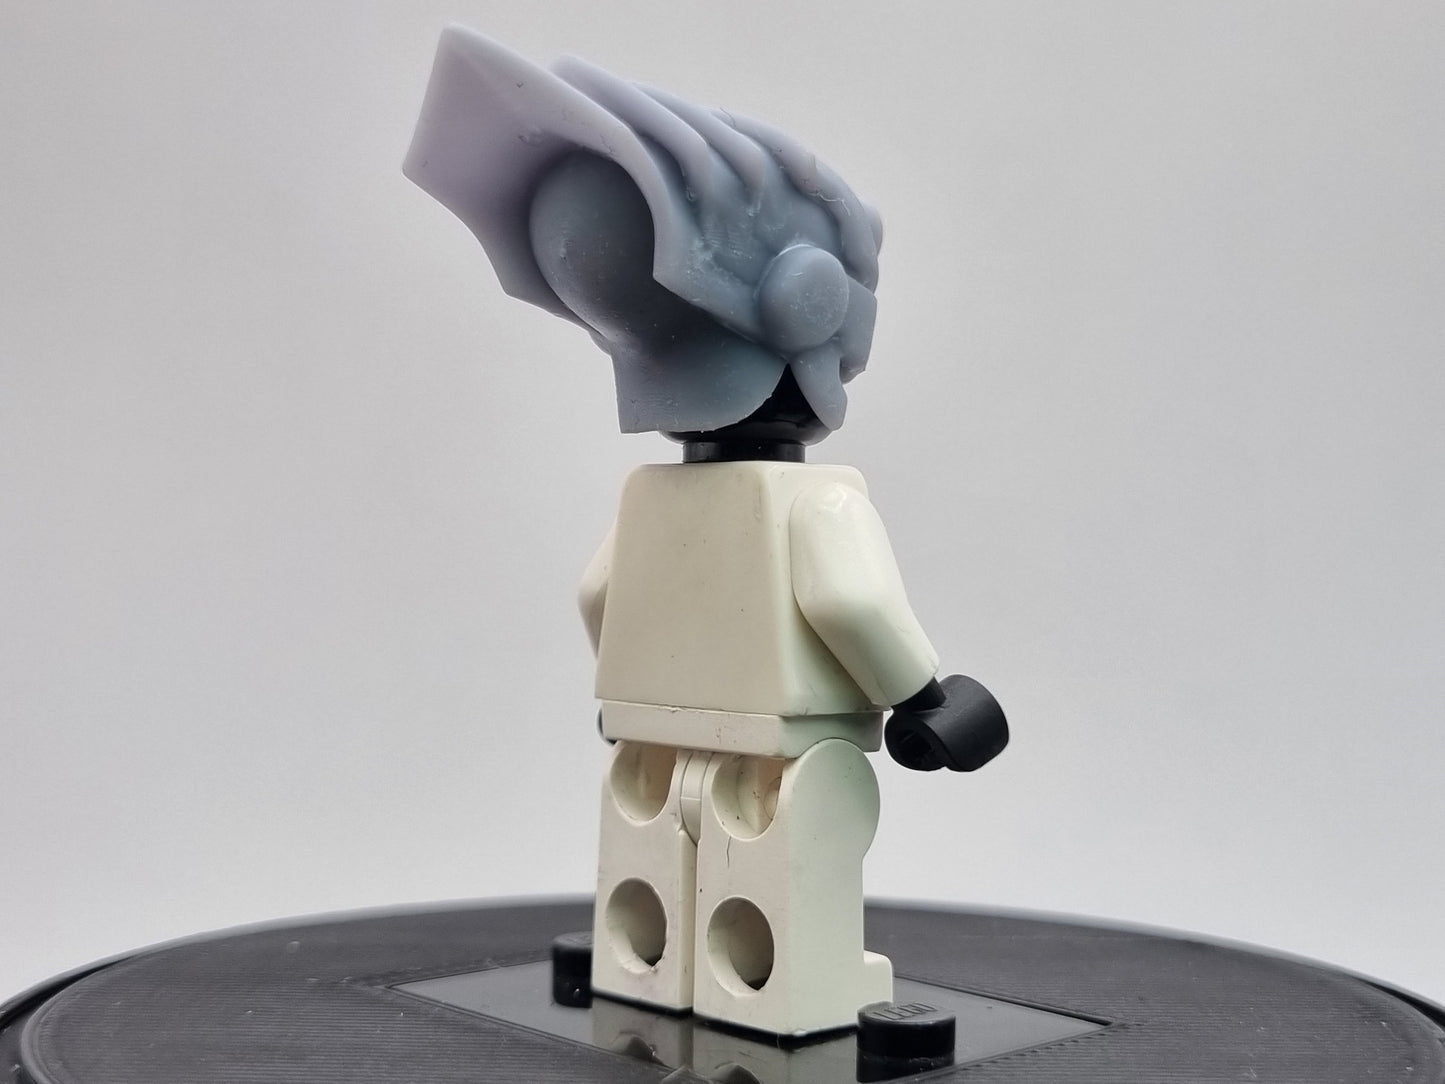 Building toy custom 3D printed evil stretching man!